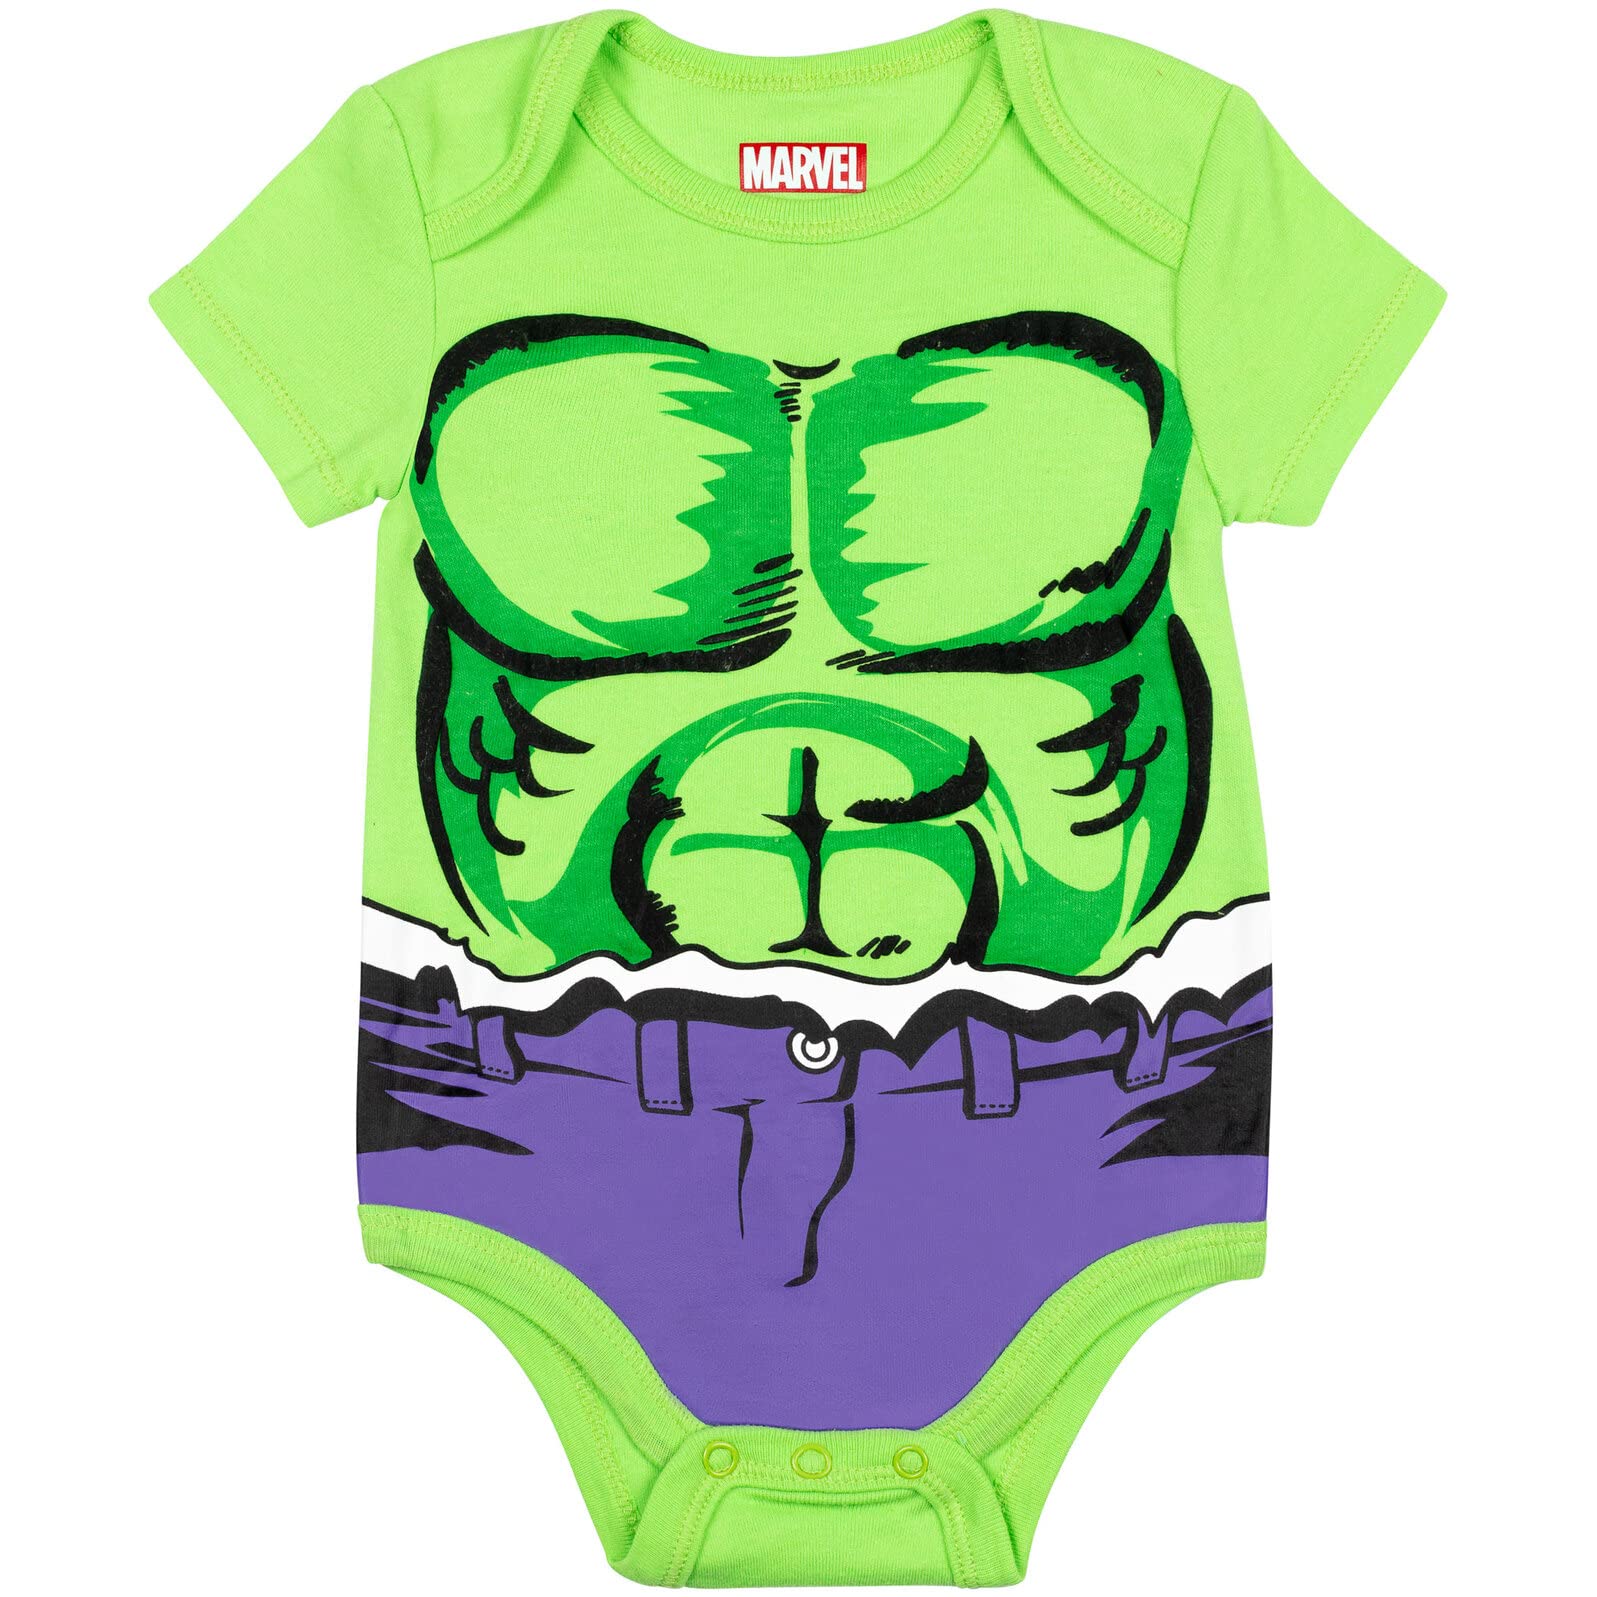 Marvel Baby Boys' 5 Pack Bodysuits - The Hulk, Spiderman, Iron Man, and Captain America